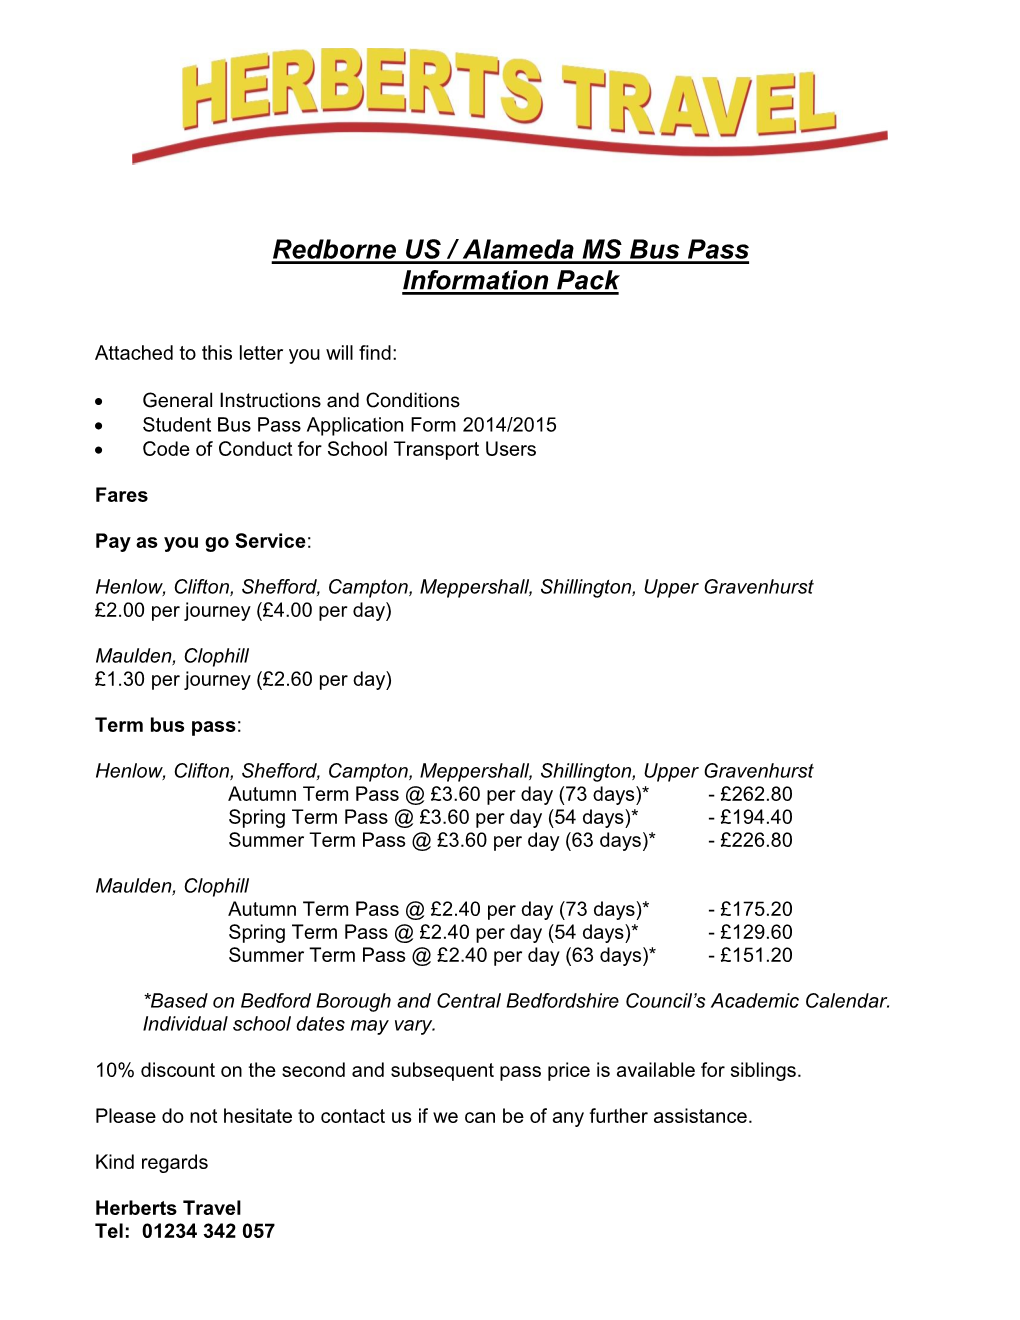 Redborne US / Alameda MS Bus Pass Information Pack